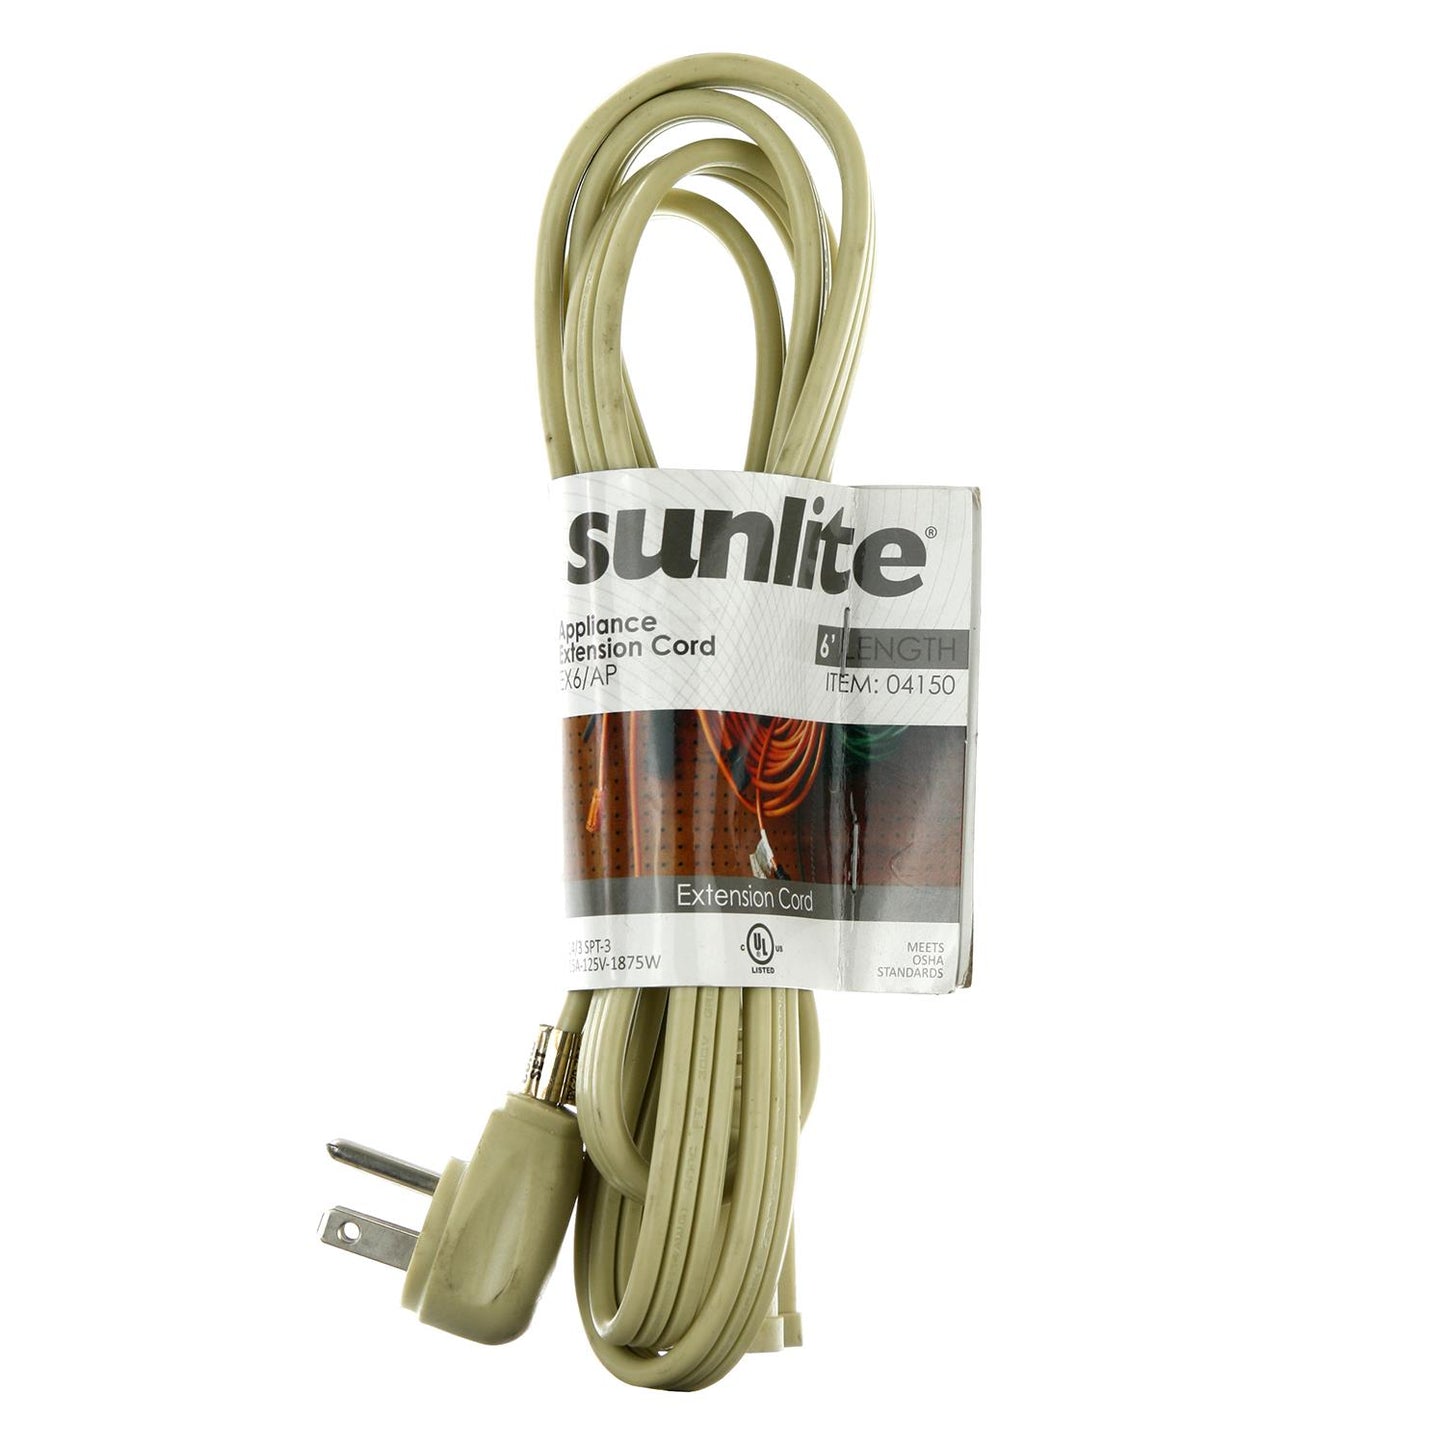 Sunlite EX6/AP Appliance 6-Feet Extension Cord, Grey